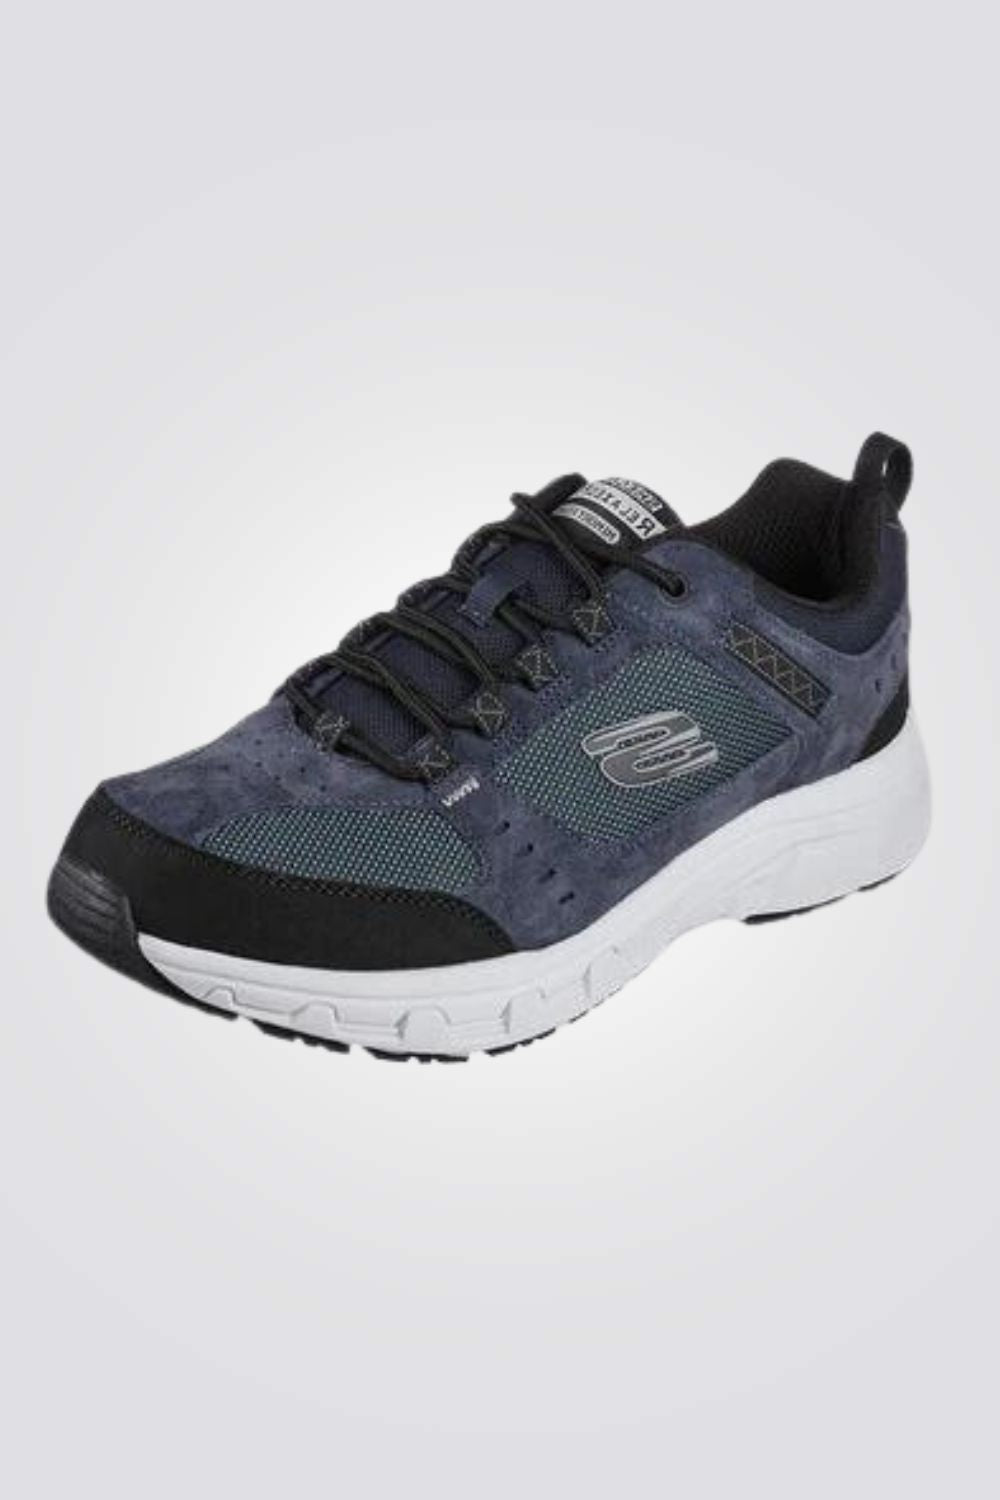 SKECHERS - נעלי הליכה לגברים Relaxed Fit Lace Up Outdoor בצבע נייבי - MASHBIR//365